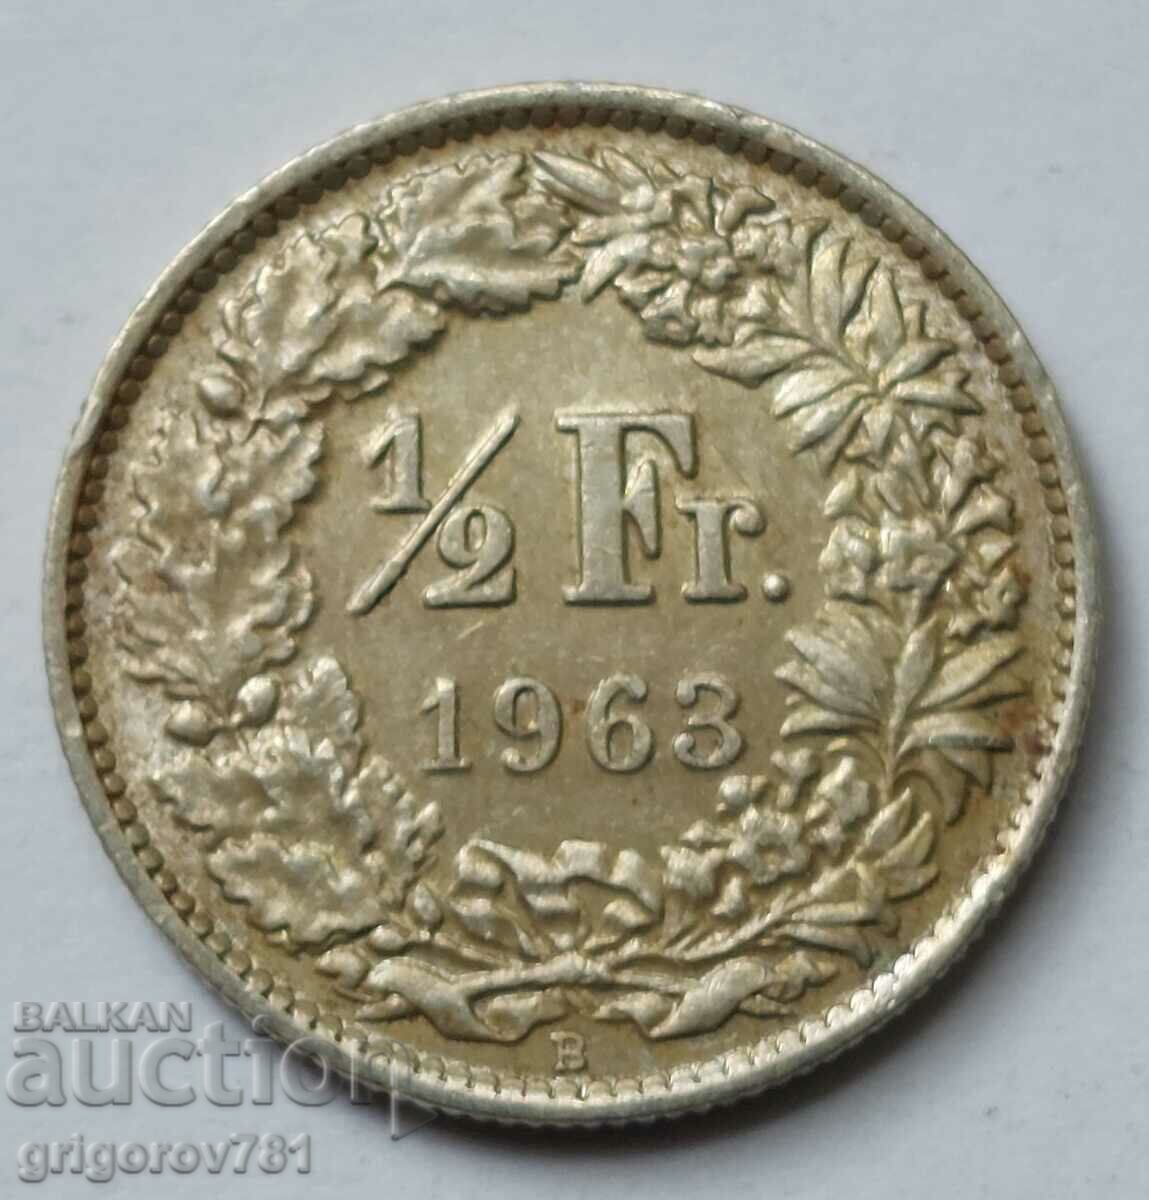 1/2 Franc Silver Switzerland 1963 B - Silver Coin #62